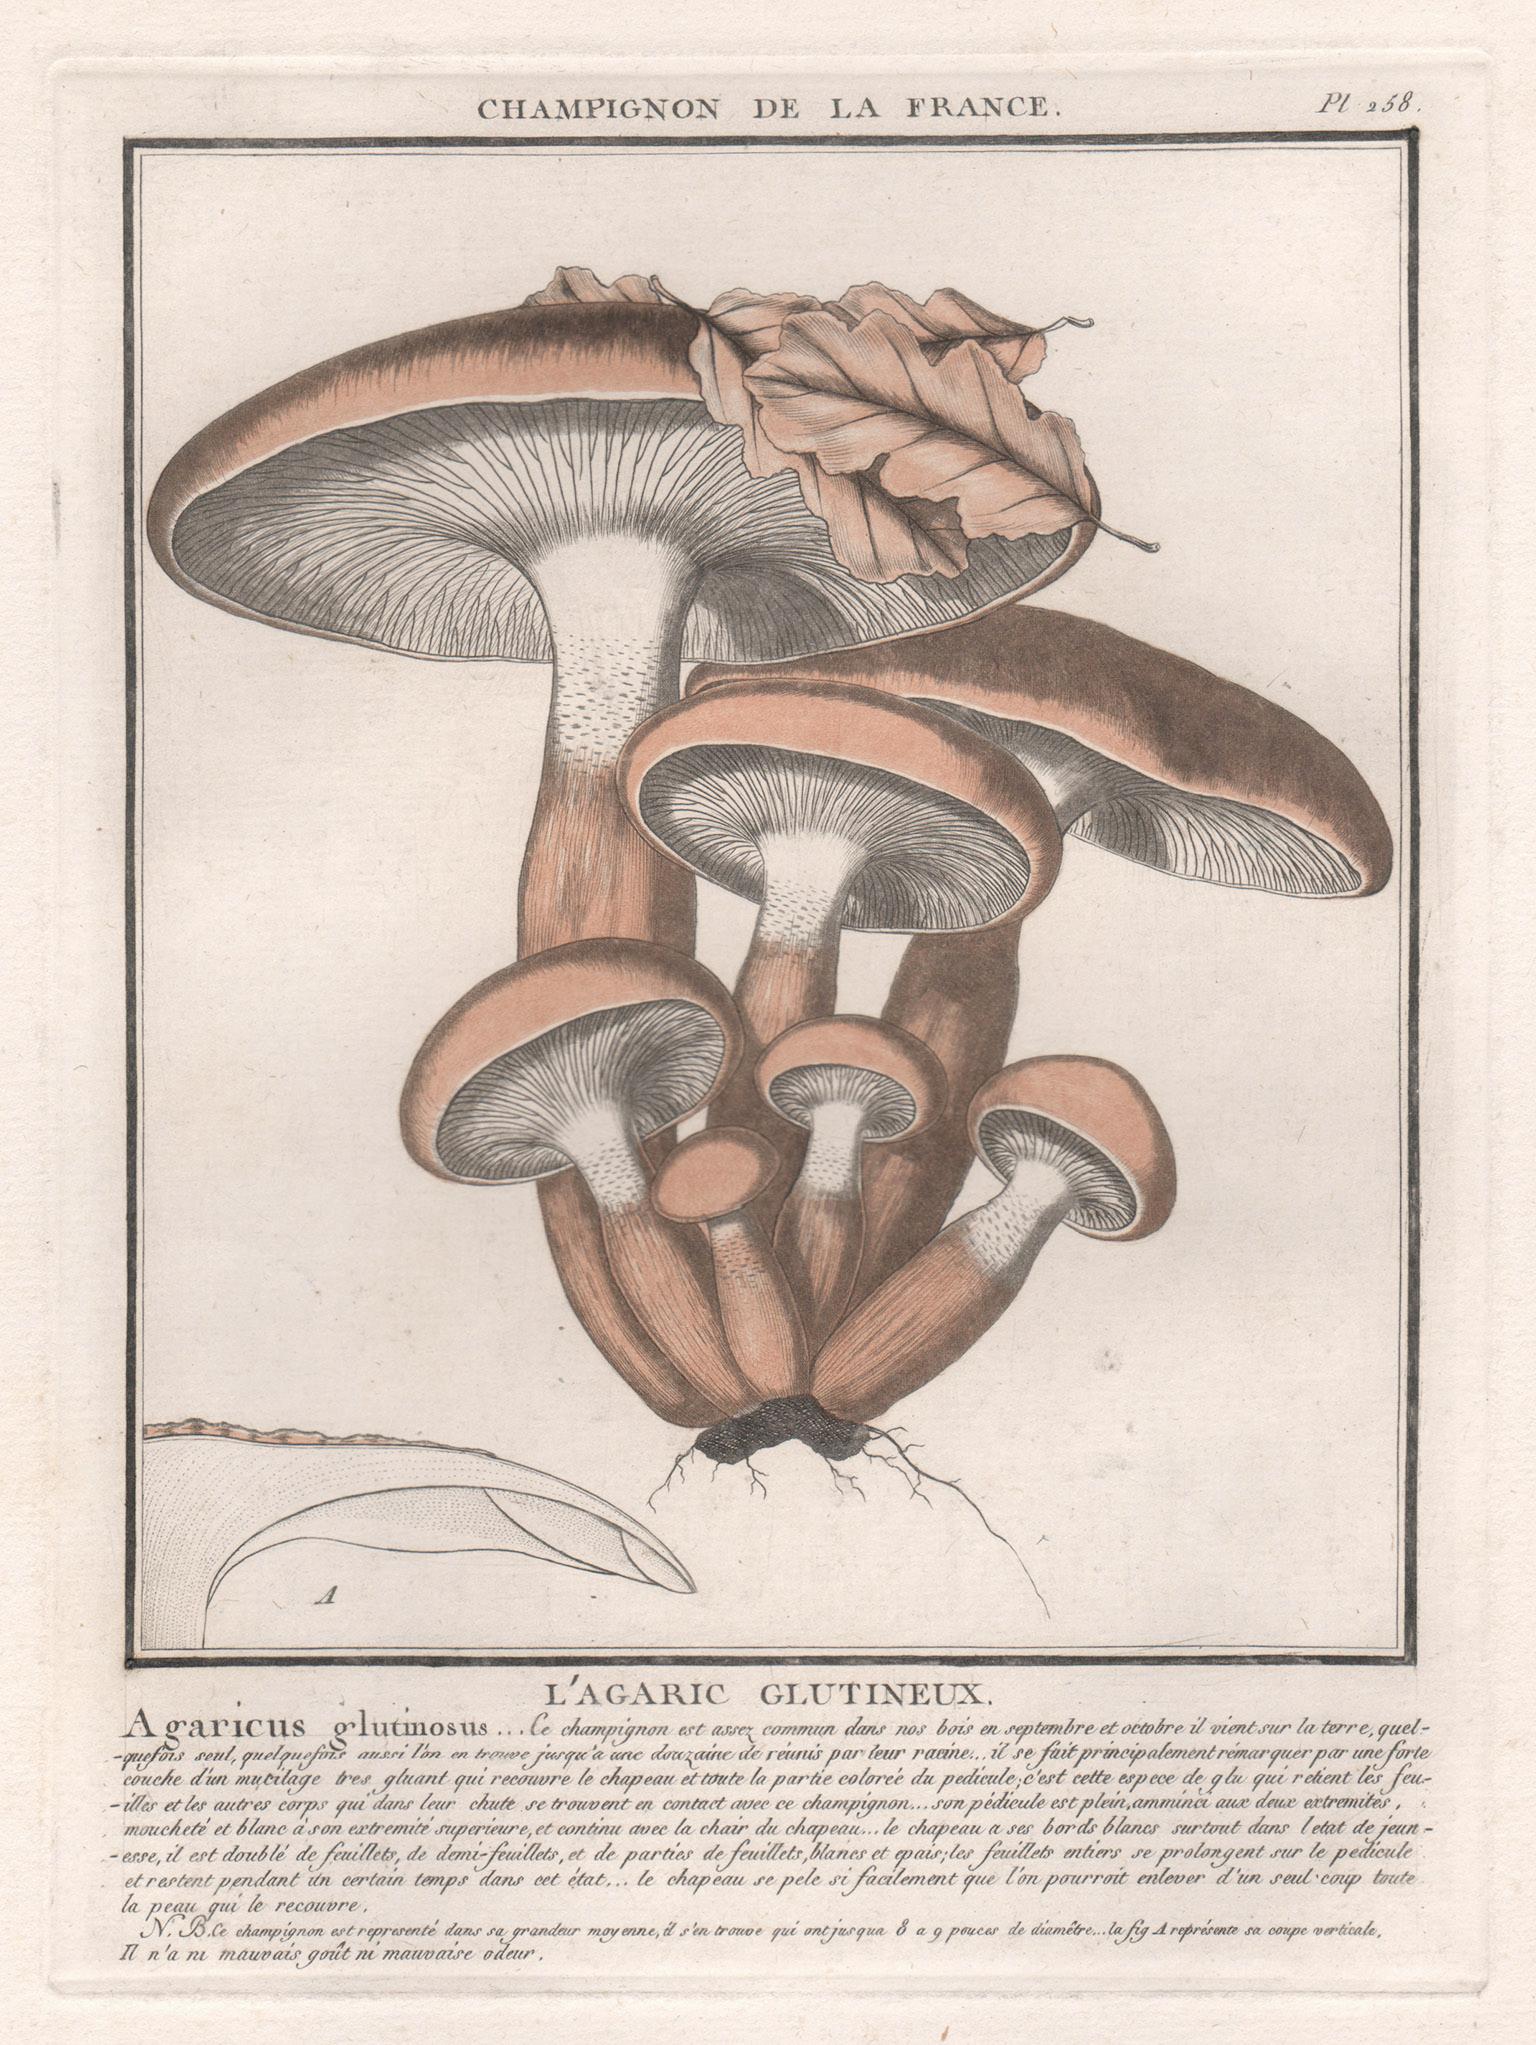 Jean Baptiste Francois Buillard Print - Champignon de la France, a French antique mushroom engraving, 1791